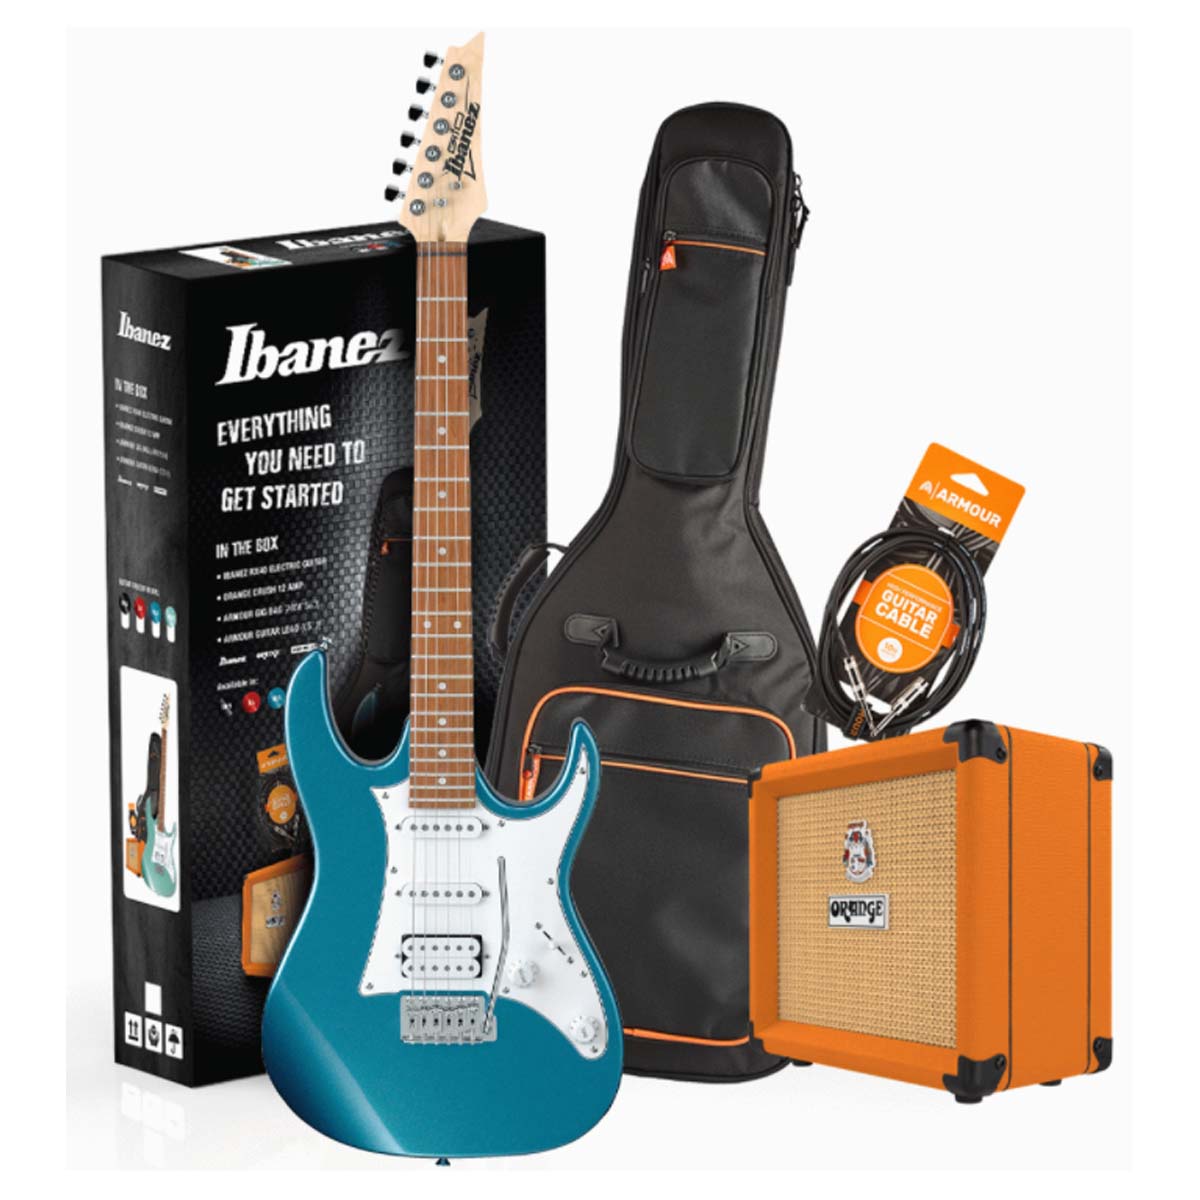 Ibanez RX40 Electric Guitar Pack Metallic Blue w/ Orange Crush 12 Amp & Bag & Lead - GTPRX40MLBPACK